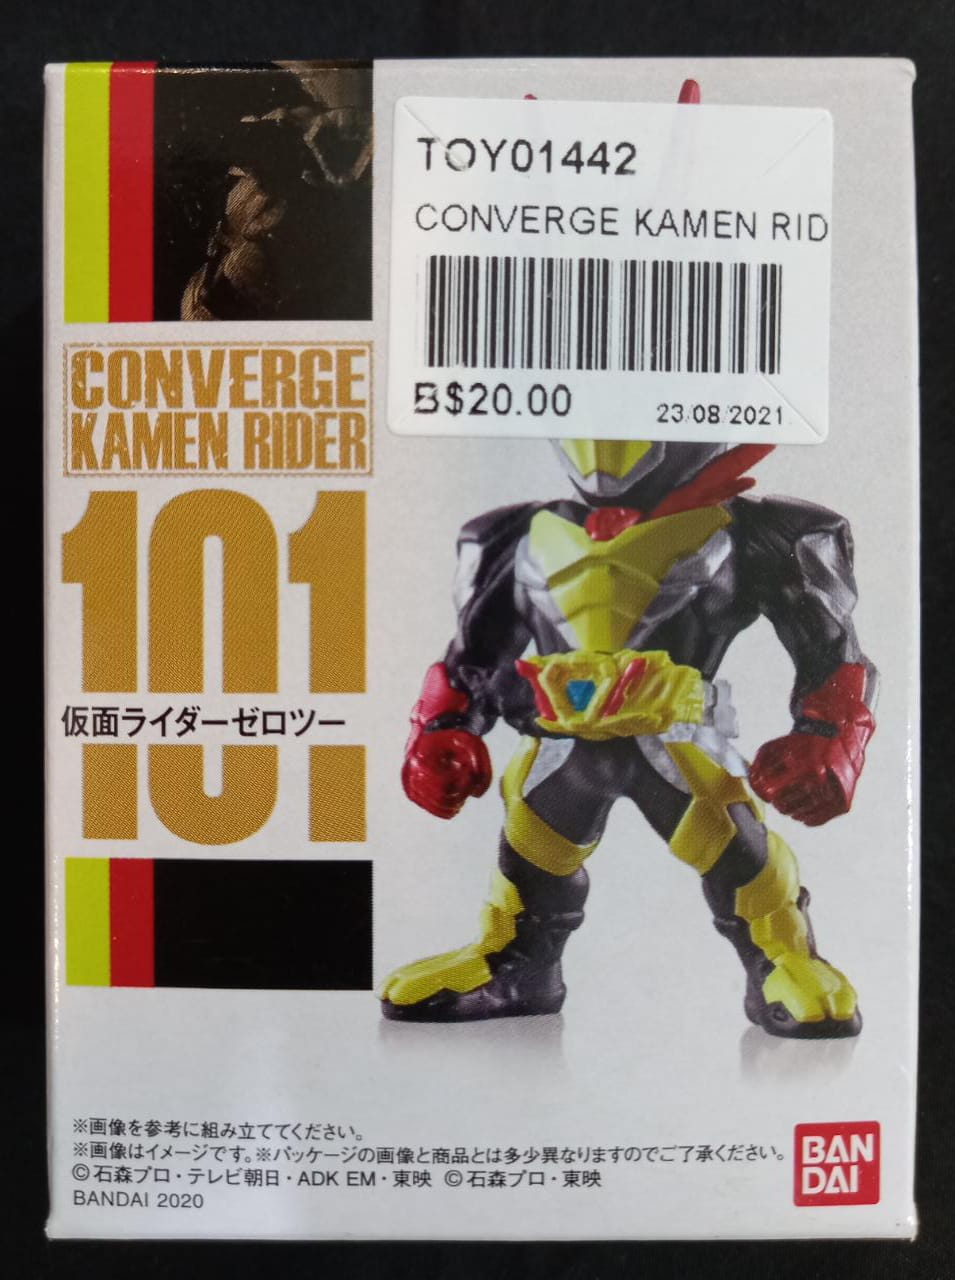 Converge Kamen Rider - 101 (BANDAI)